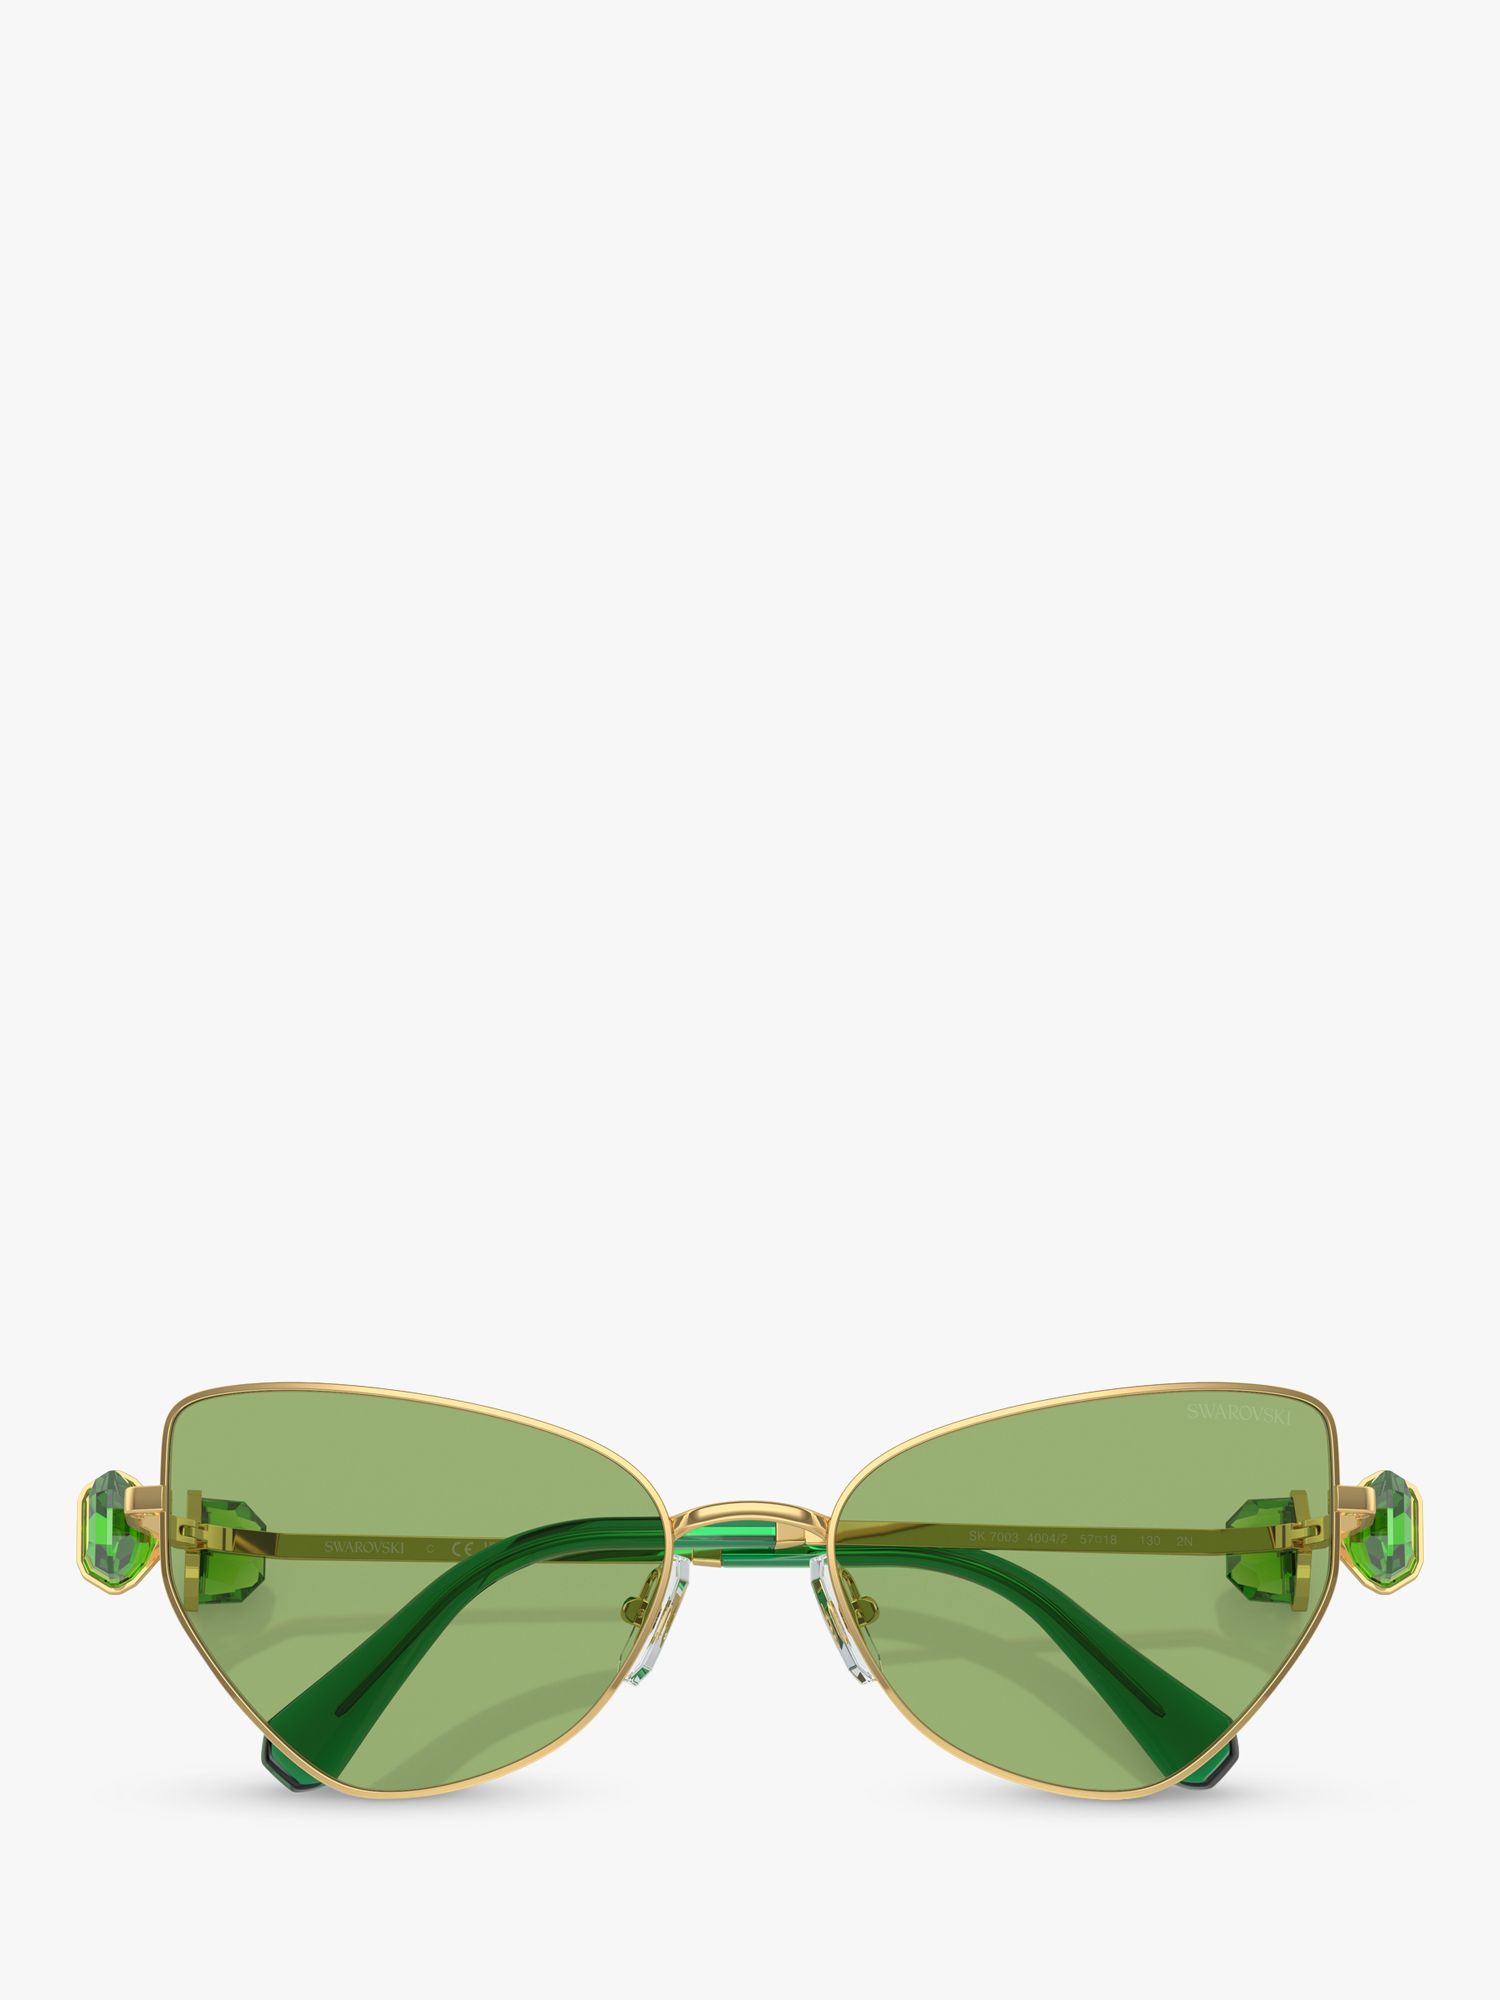 Buy Swarovski SK7003 Women's Irregular Butterfly Sunglasses, Gold/Green Online at johnlewis.com